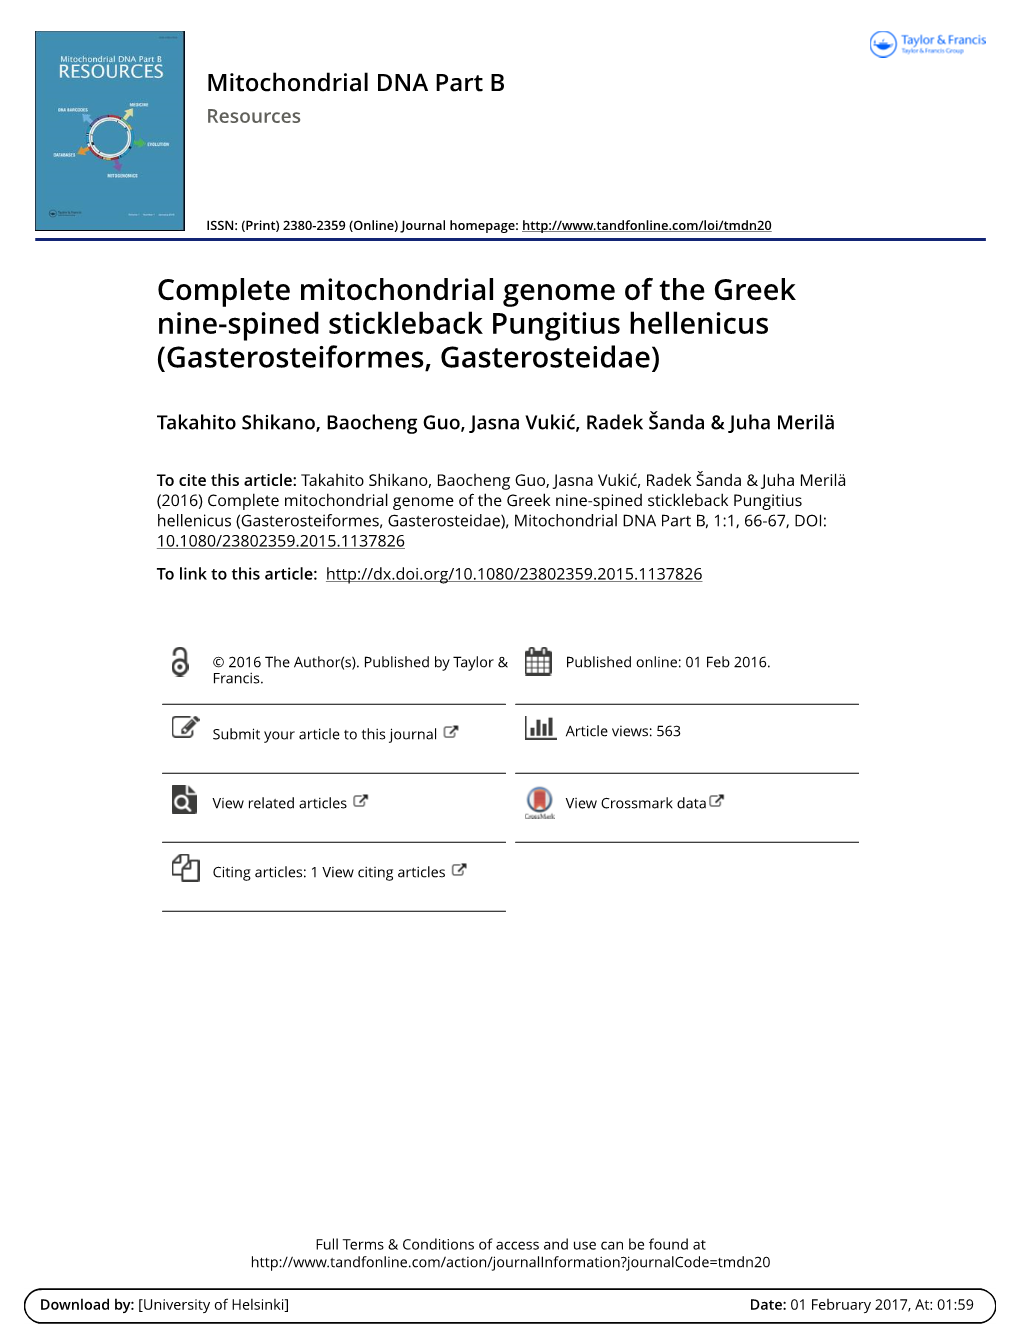 Complete Mitochondrial Genome of the Greek Nine-Spined Stickleback Pungitius Hellenicus (Gasterosteiformes, Gasterosteidae)